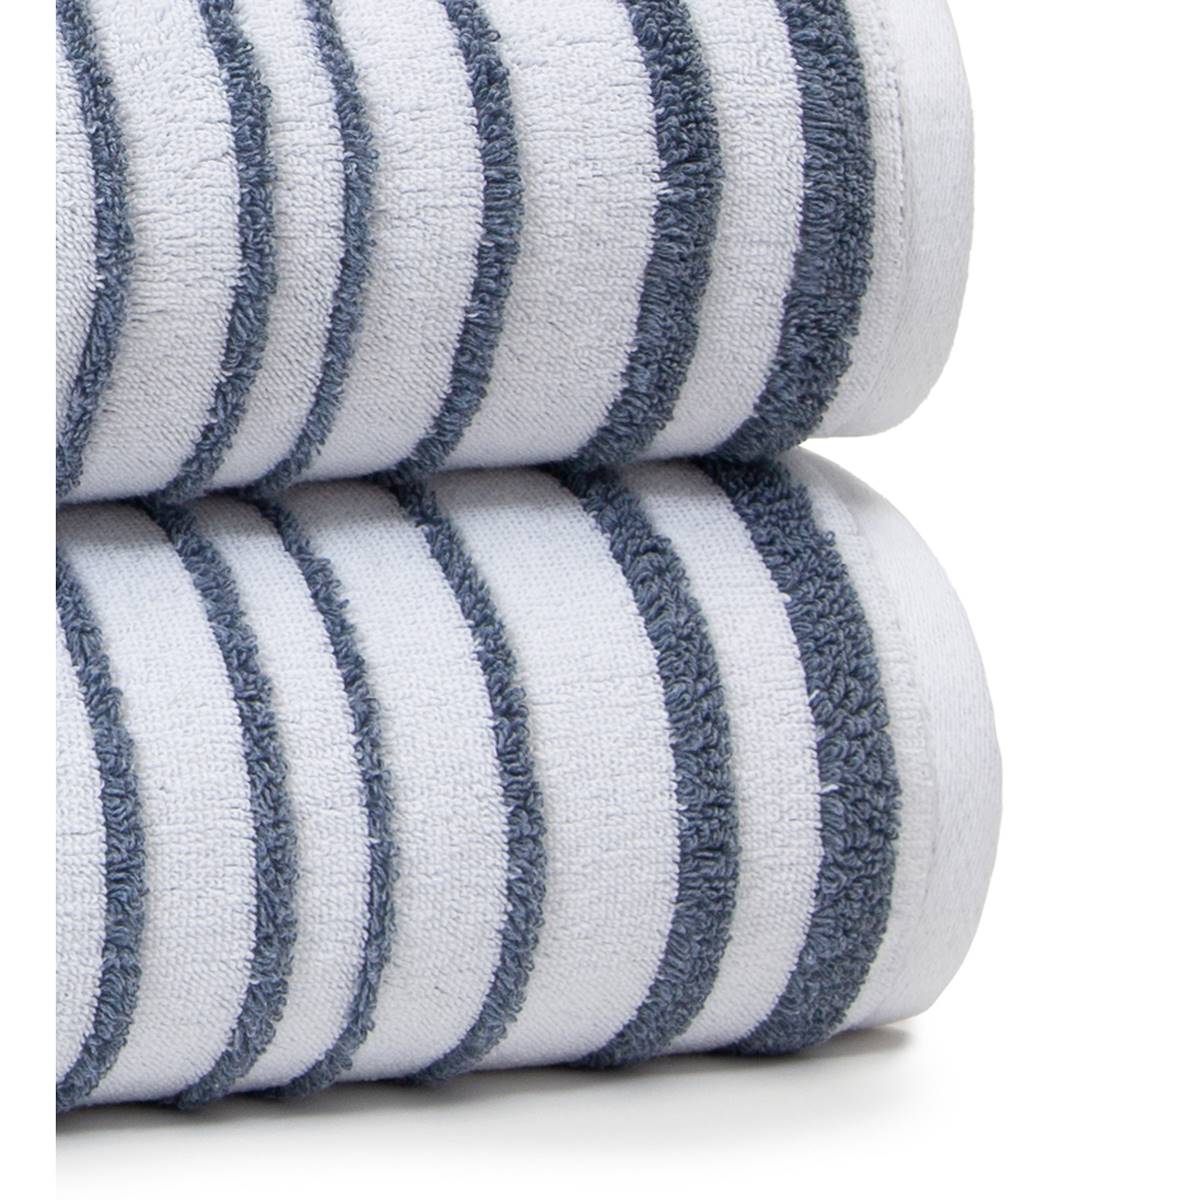 Cassadecor Urbane Stripe Bath Towel Collection